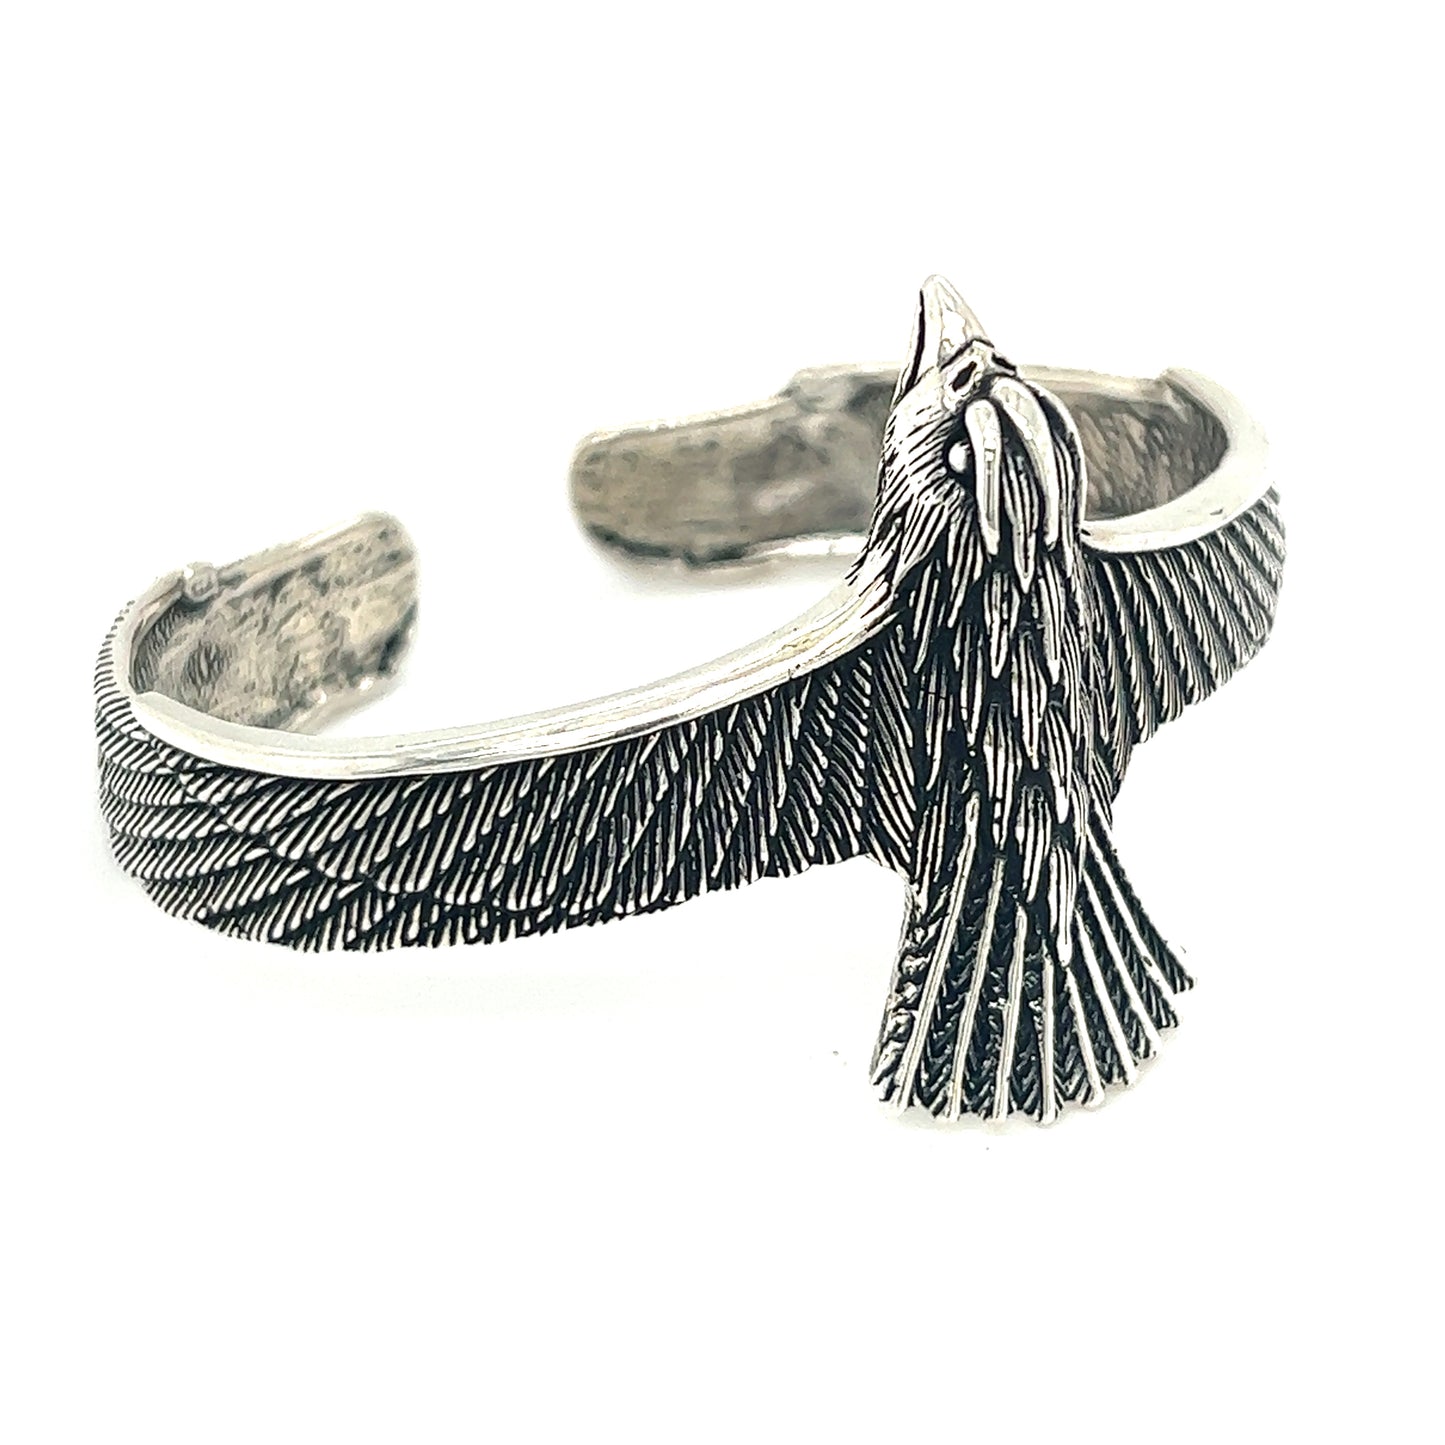 A Super Silver Unique Raven Cuff bracelet, symbolizing the enchanting world of birds.